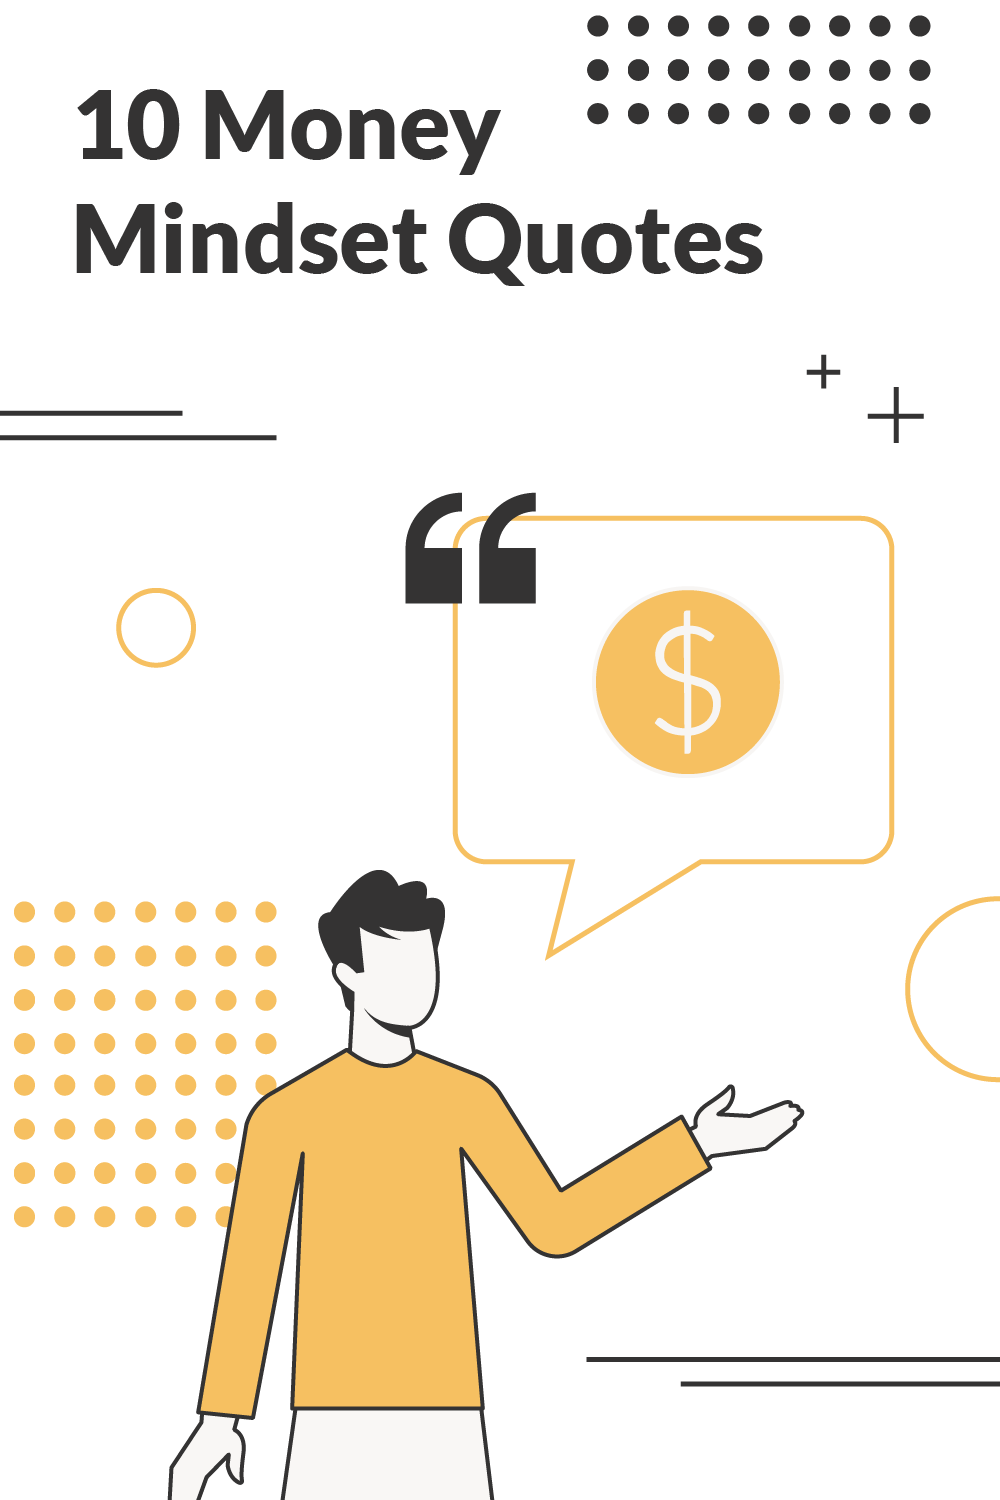 Money Mindset Quotes